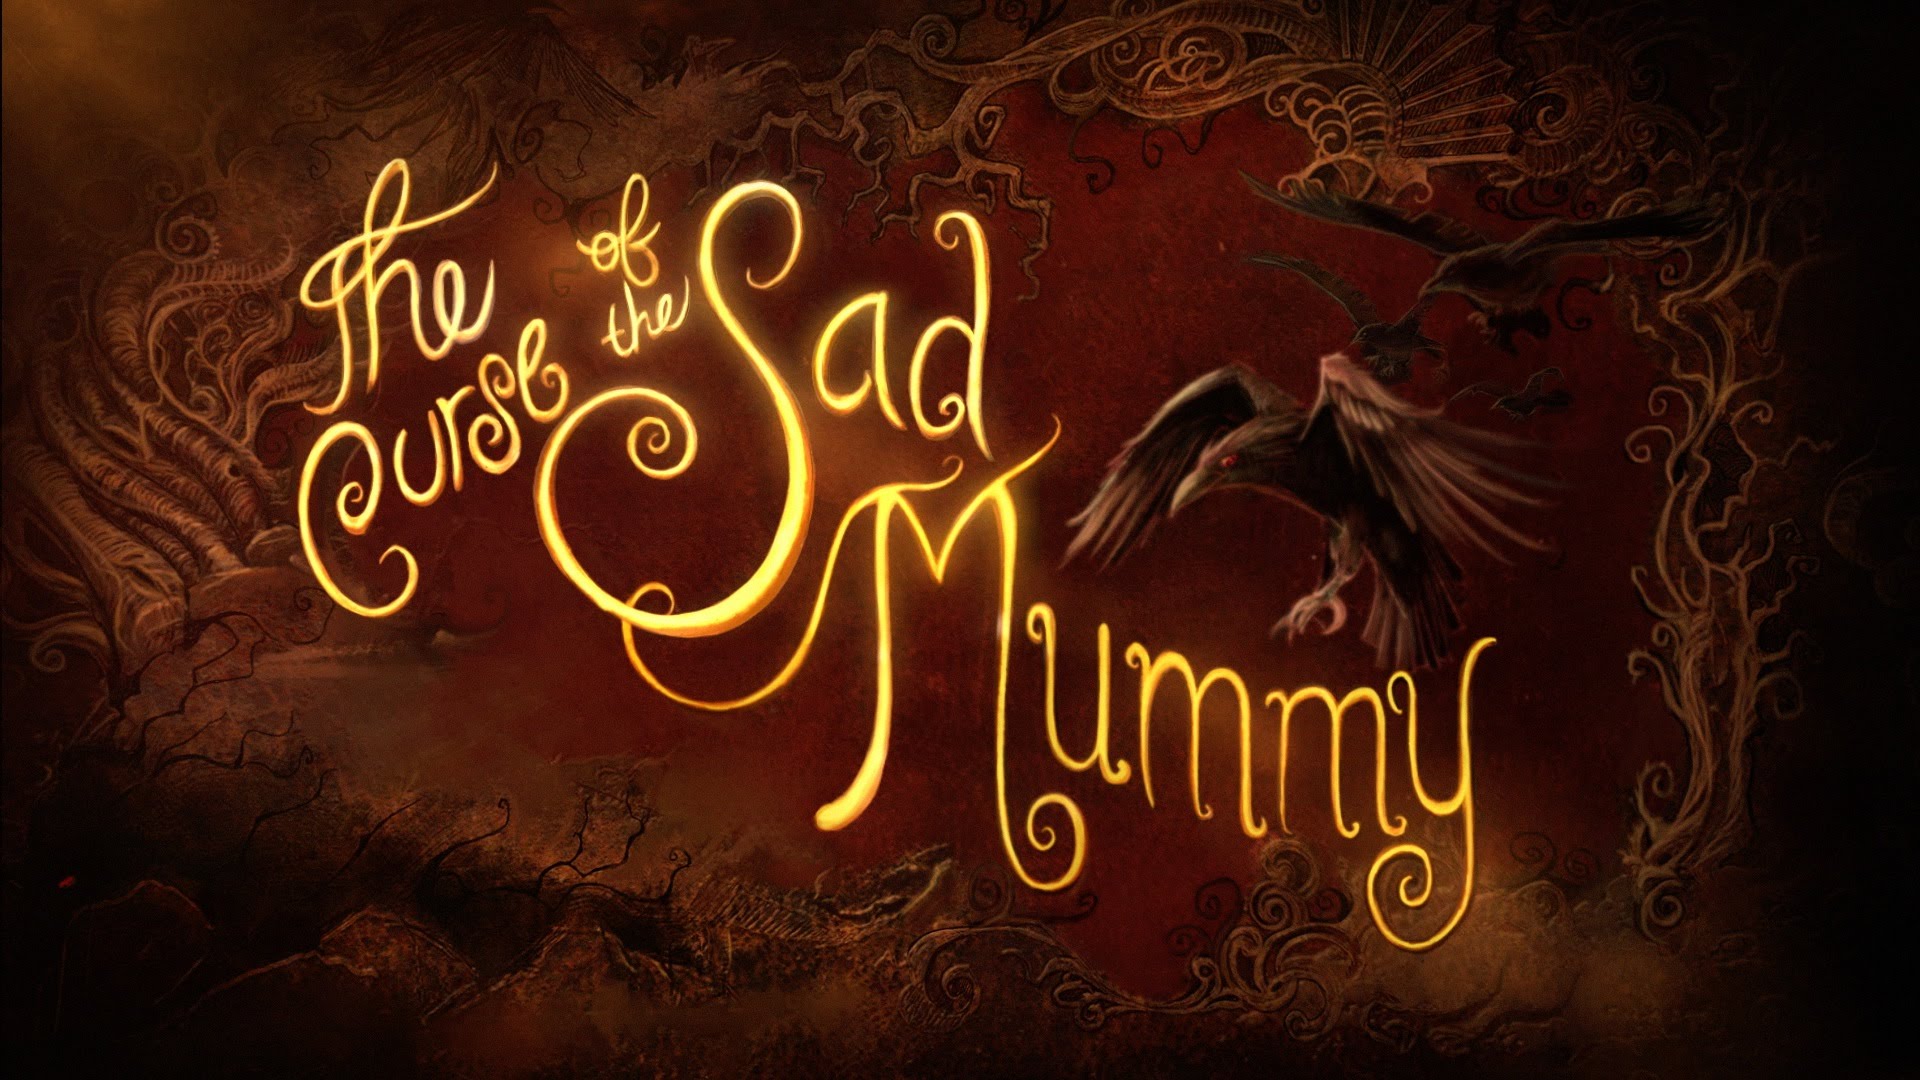 The Curse of the Sad Mummy